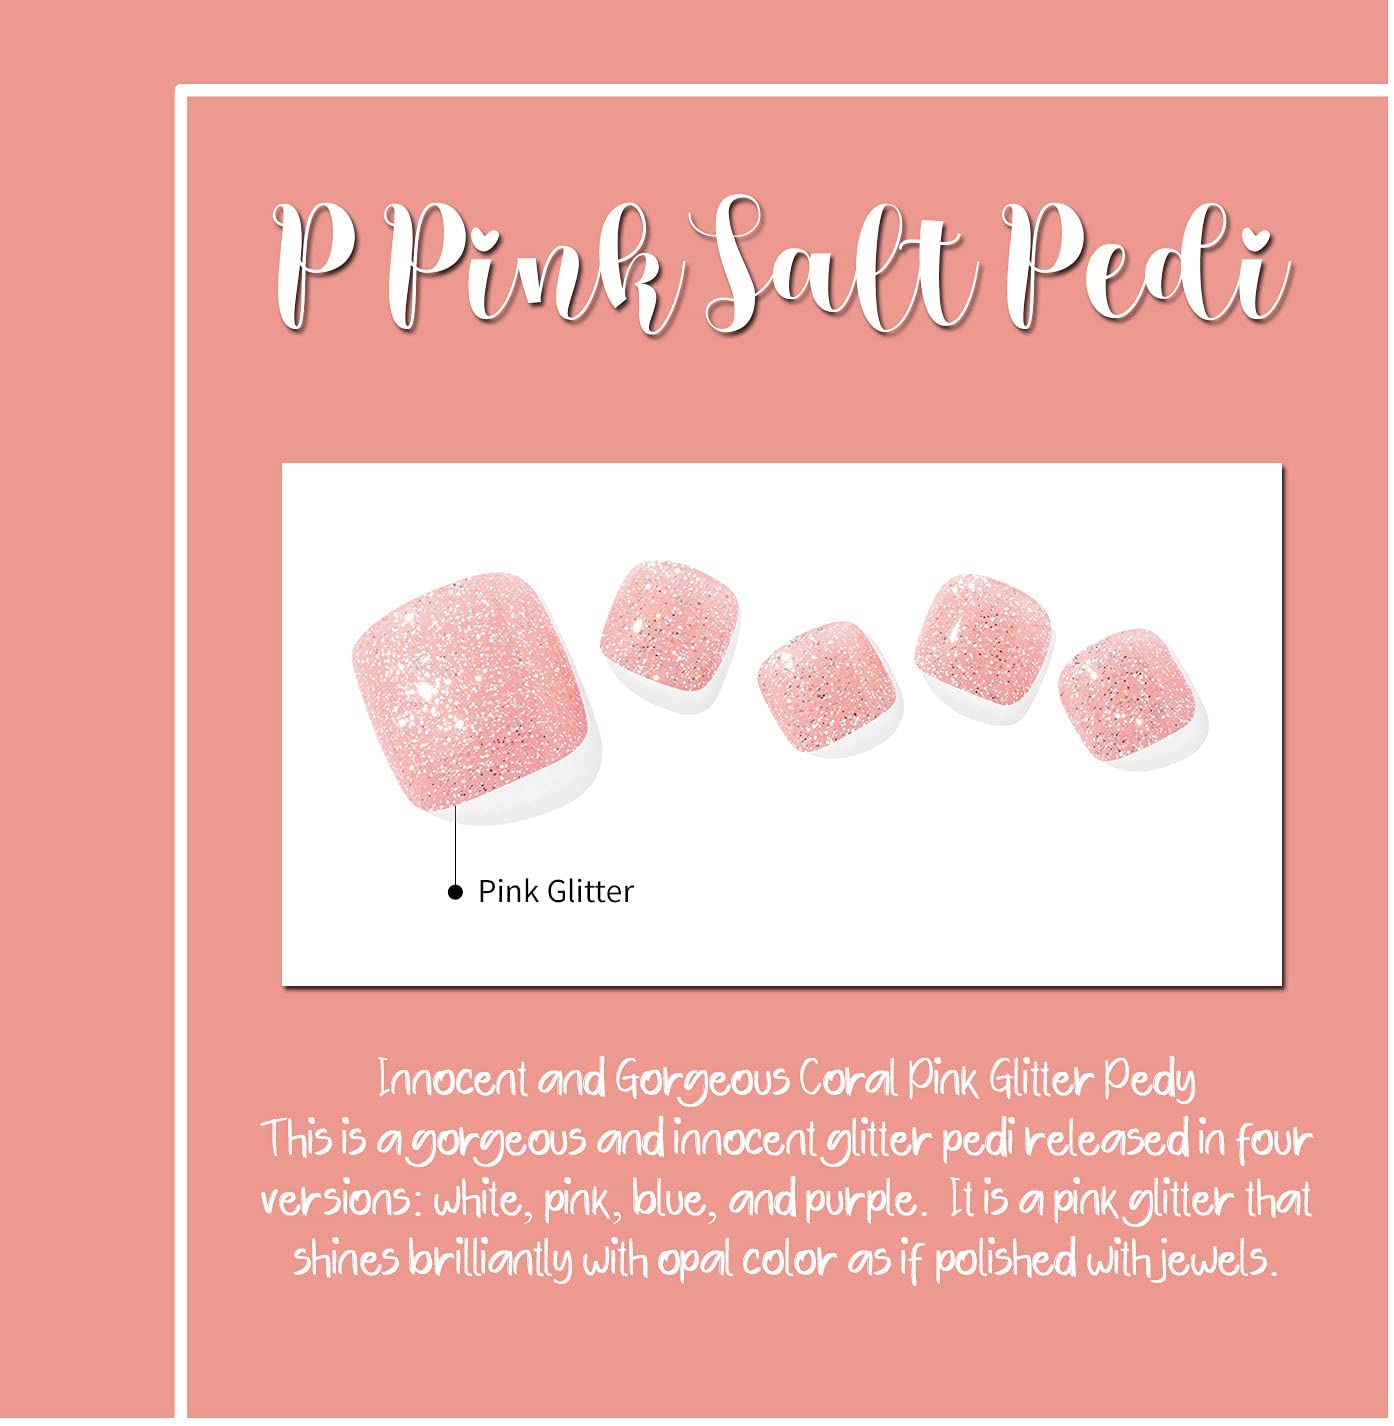 Ohora (P Pink Salt Pedi)